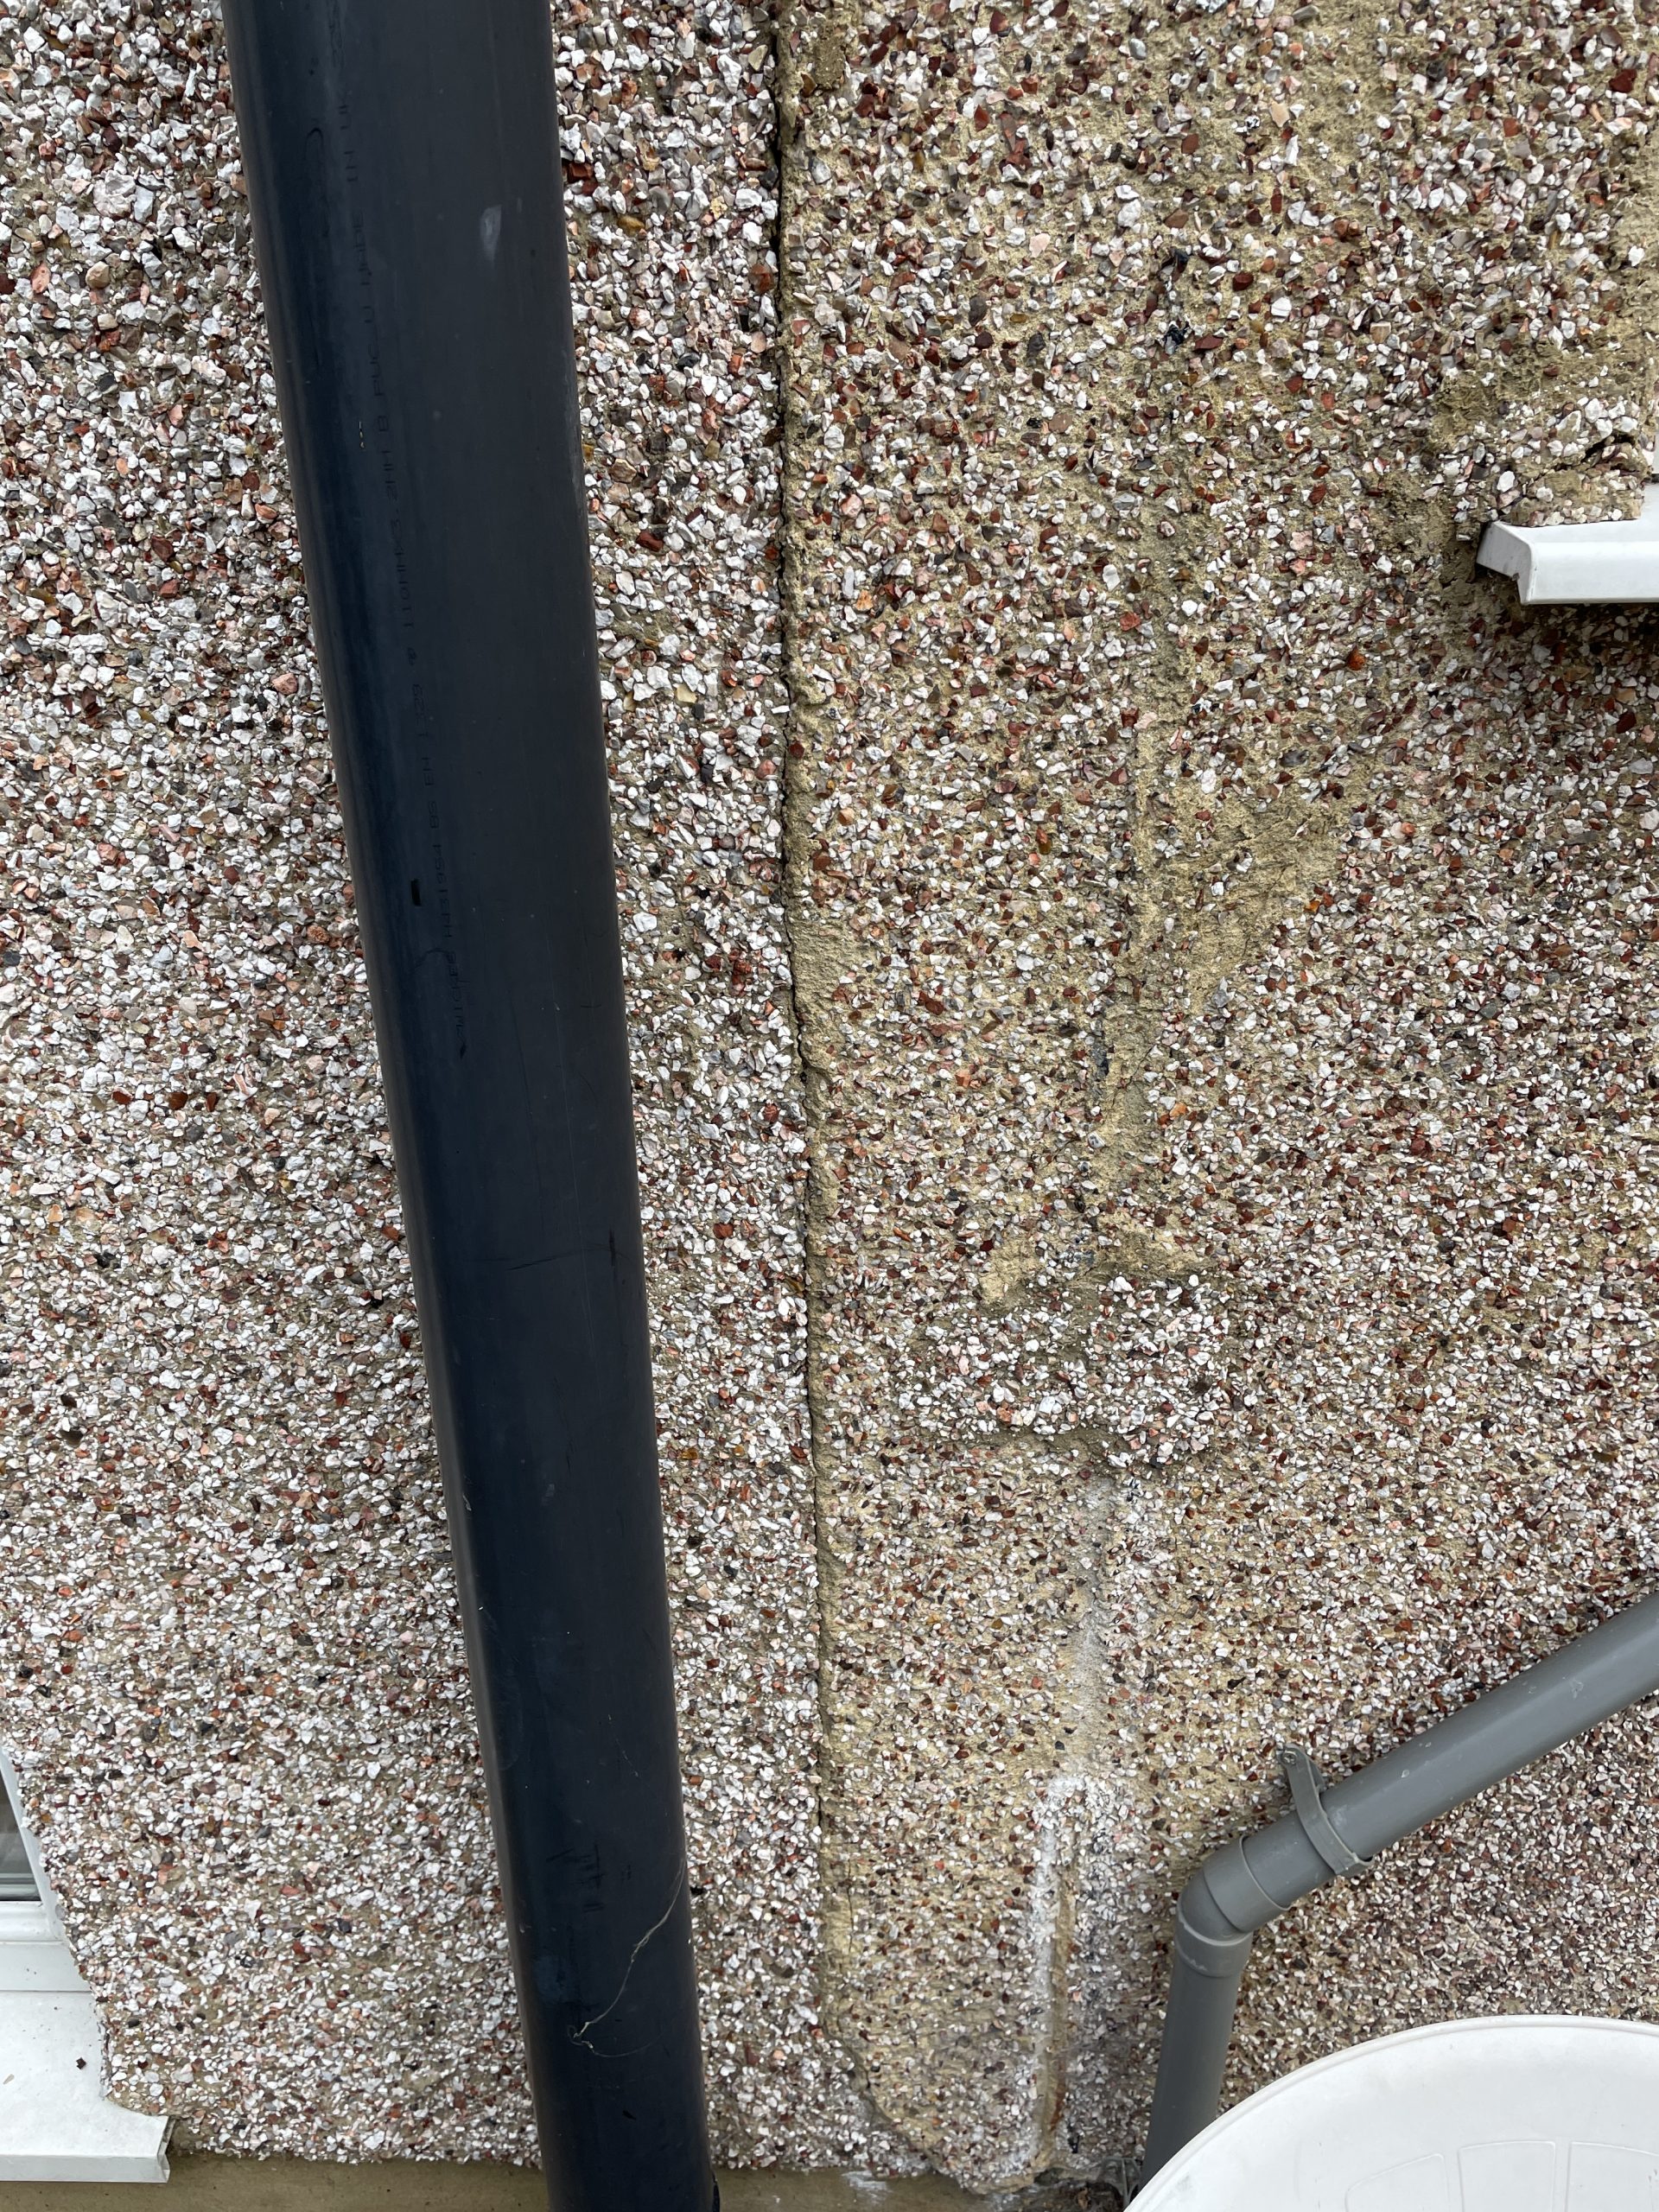 Cracks in a house in Harrow